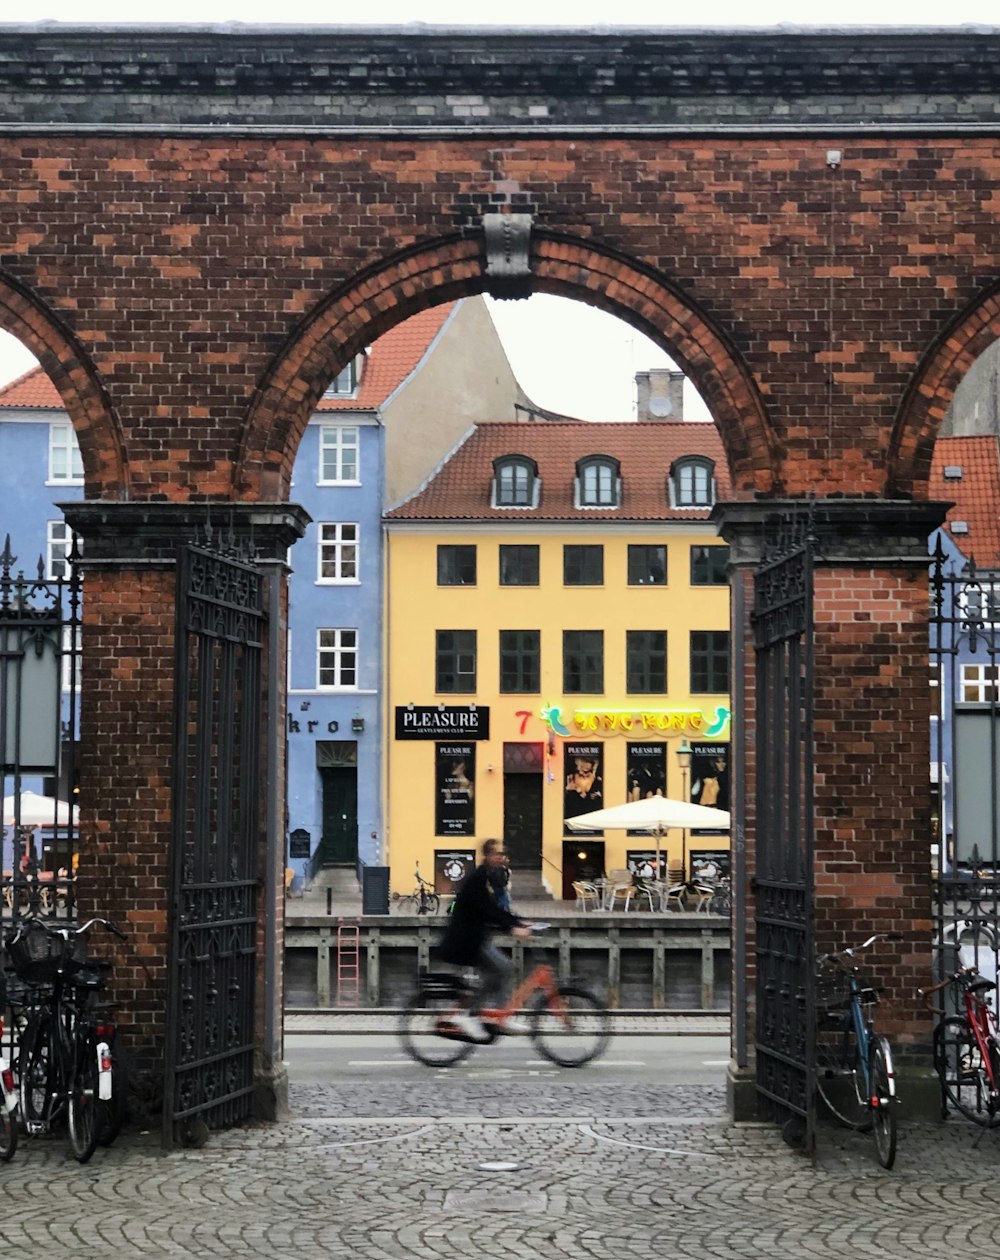 a man riding a bike through a brick archway